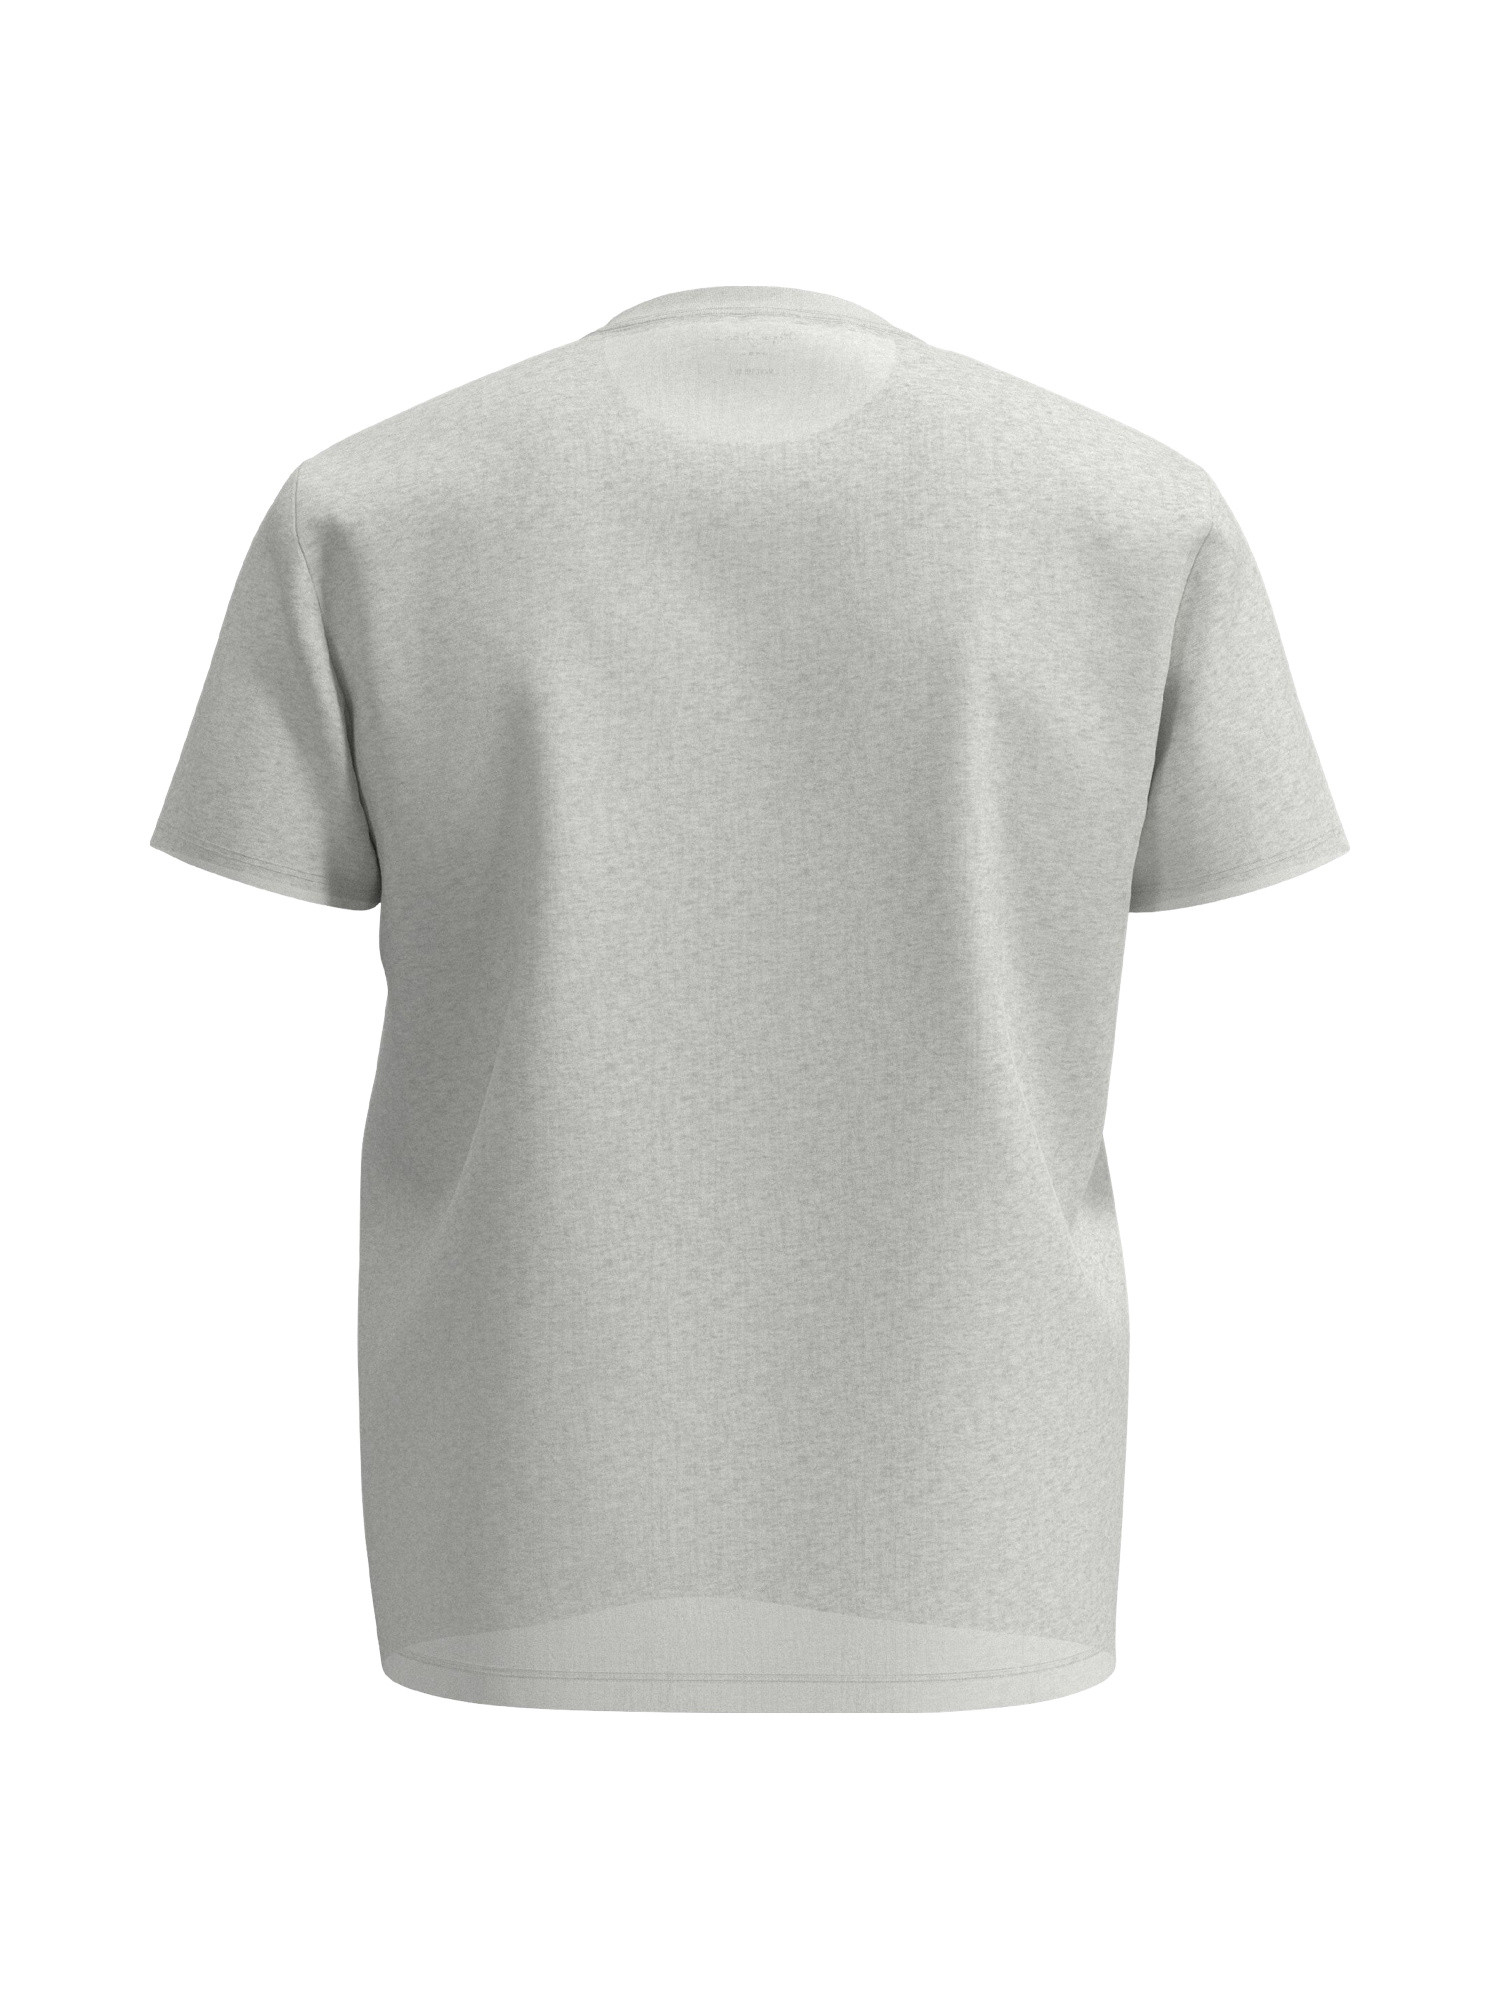 Pepe Jeans - Cotton logo T-shirt, White, large image number 1